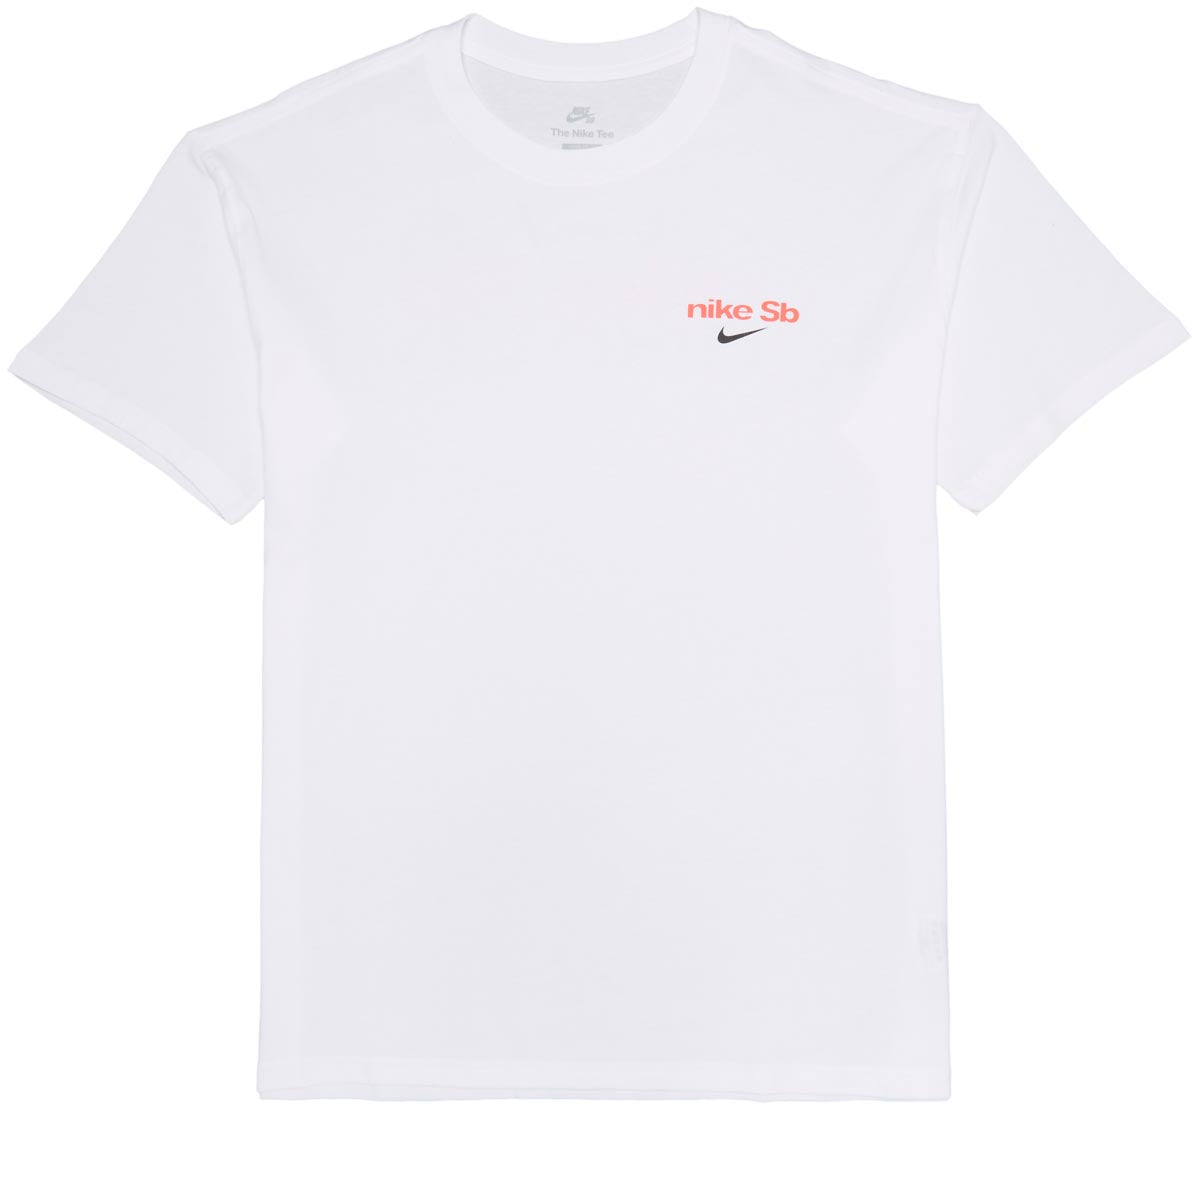 Nike SB Anchored T-Shirt - White image 2